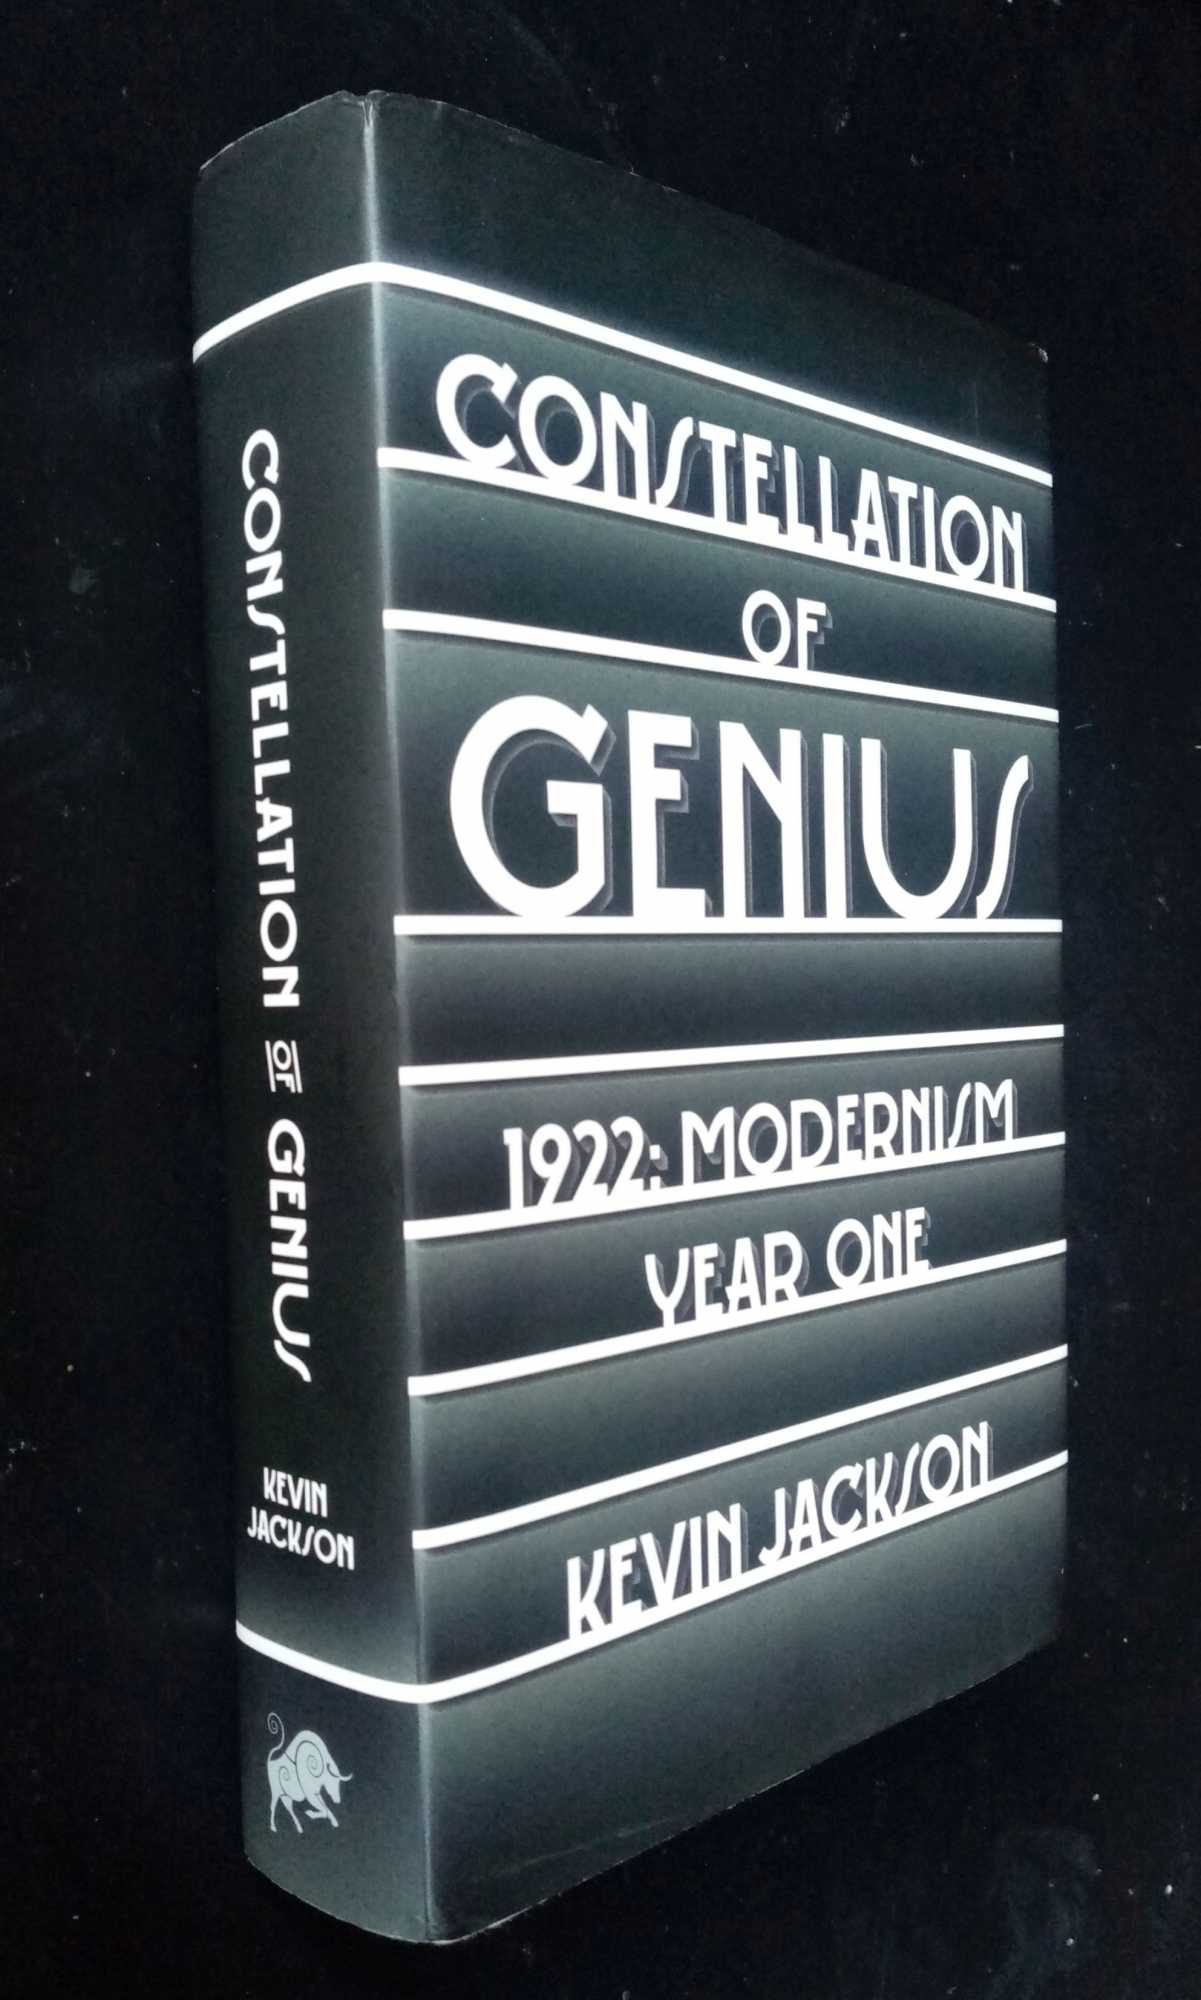 Kevin Jackson - Constellation of Genius: 1922: Modernism Year One